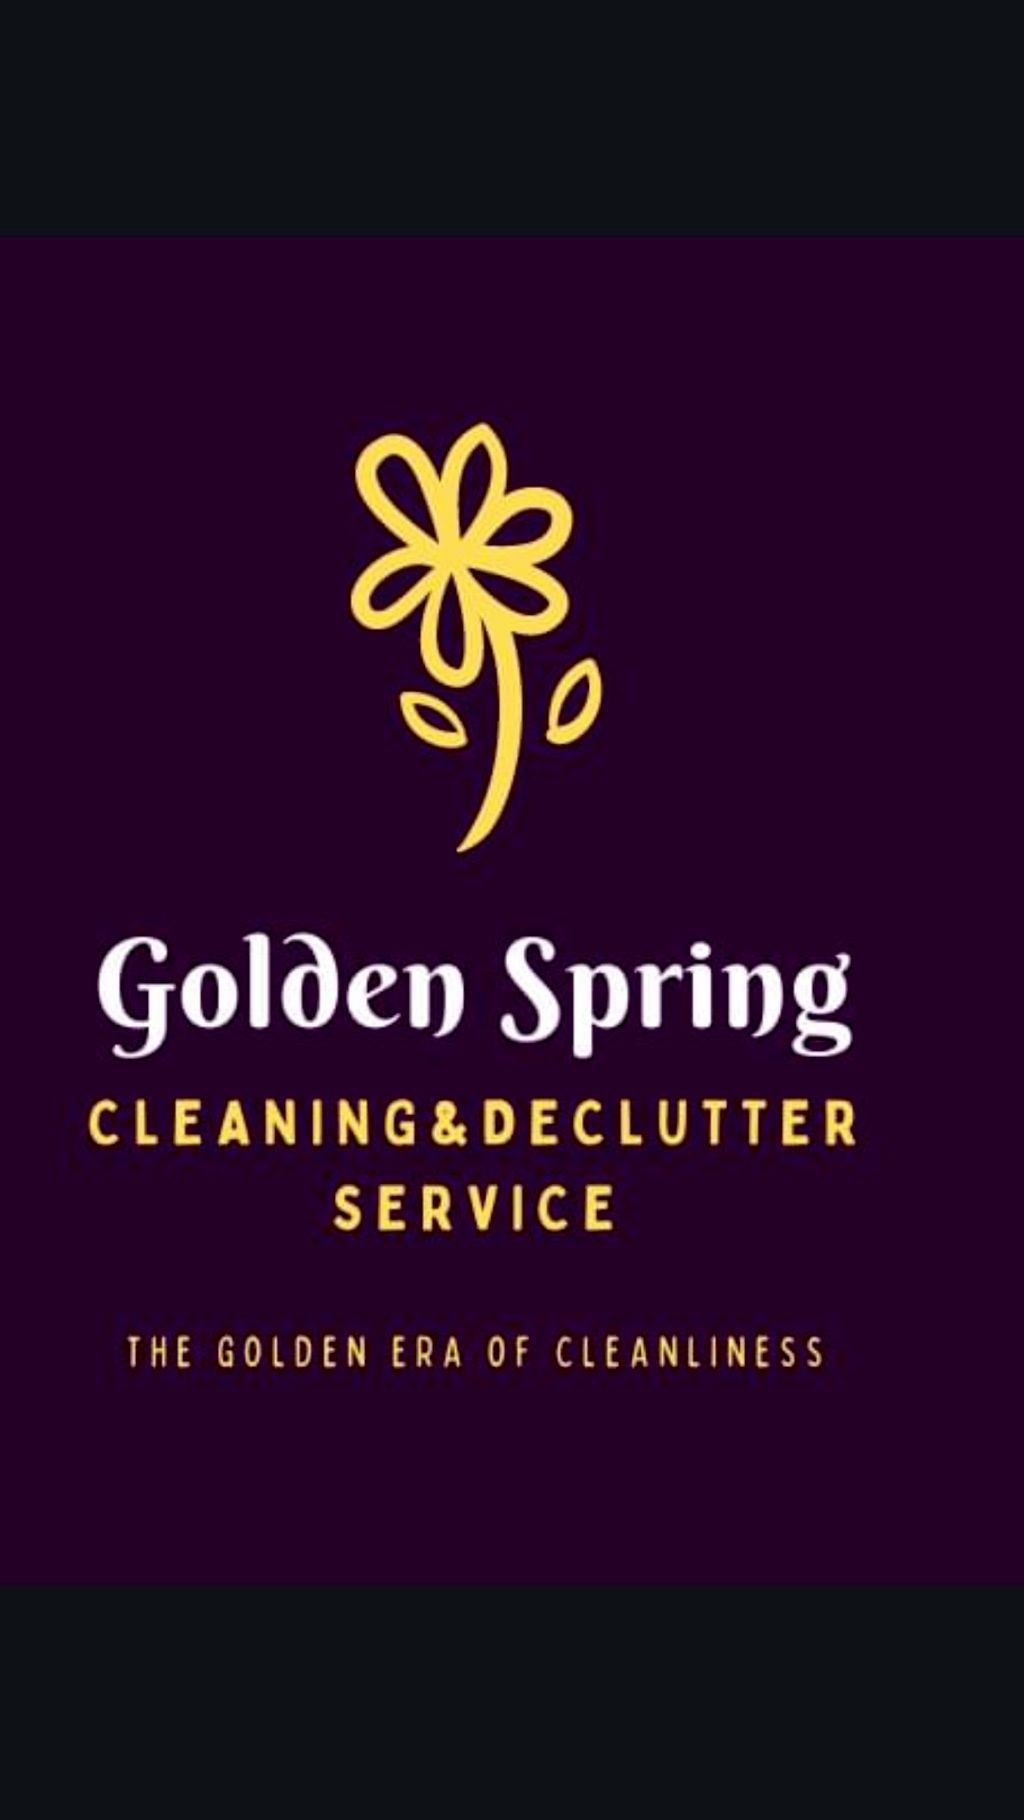 Golden Spring Cleaning & Decluttering